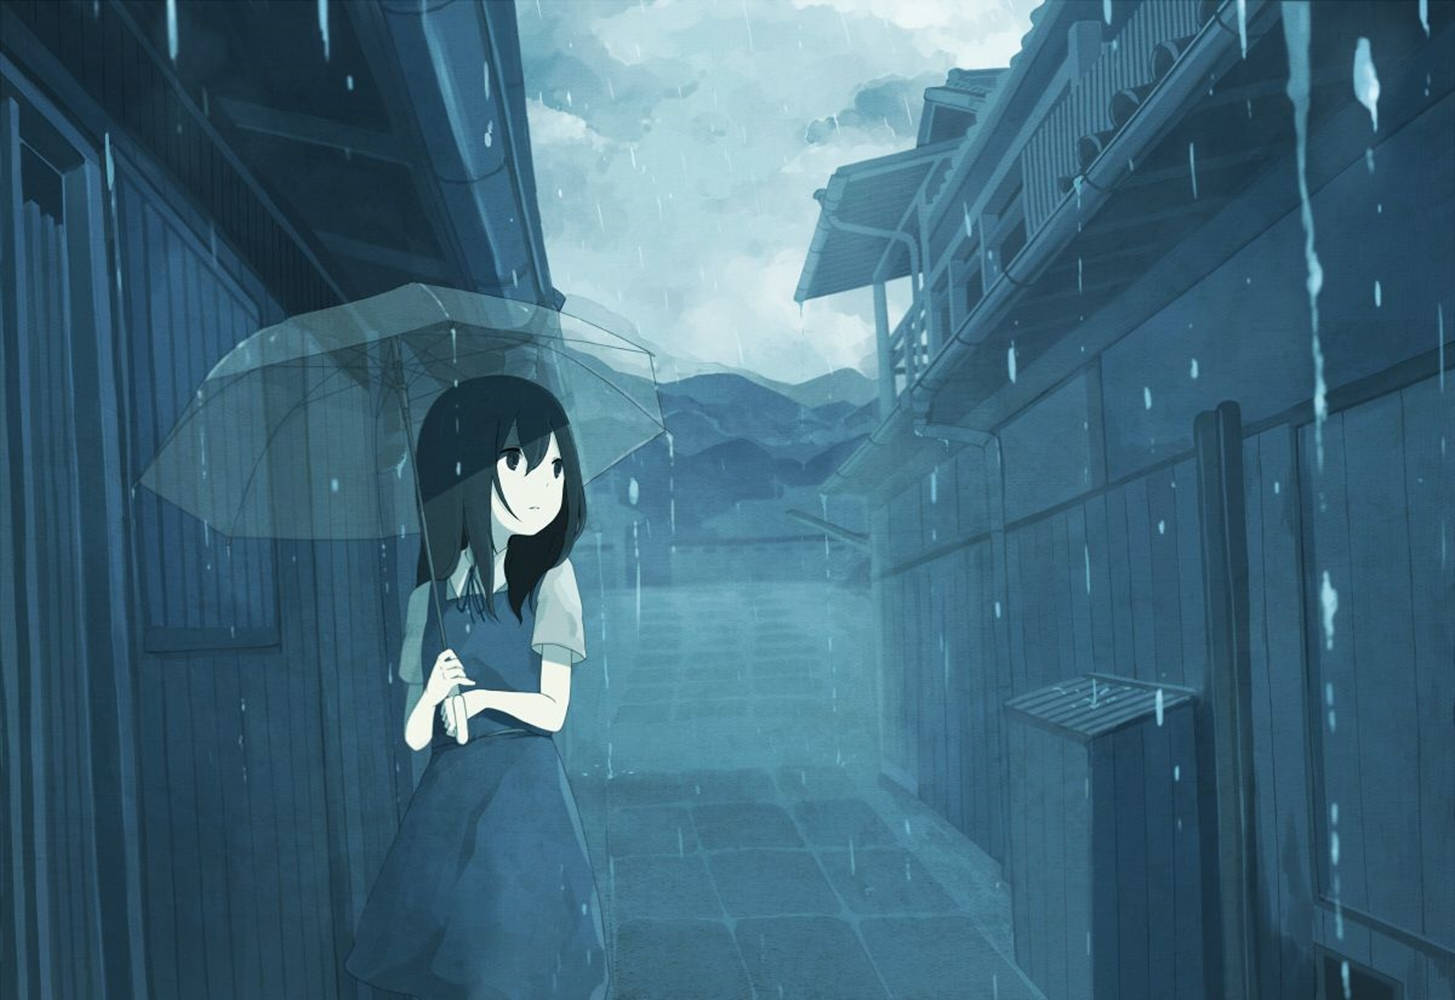 Download Anime Girl Sad Alone With Umbrella In Rain Wallpaper | Wallpapers .com